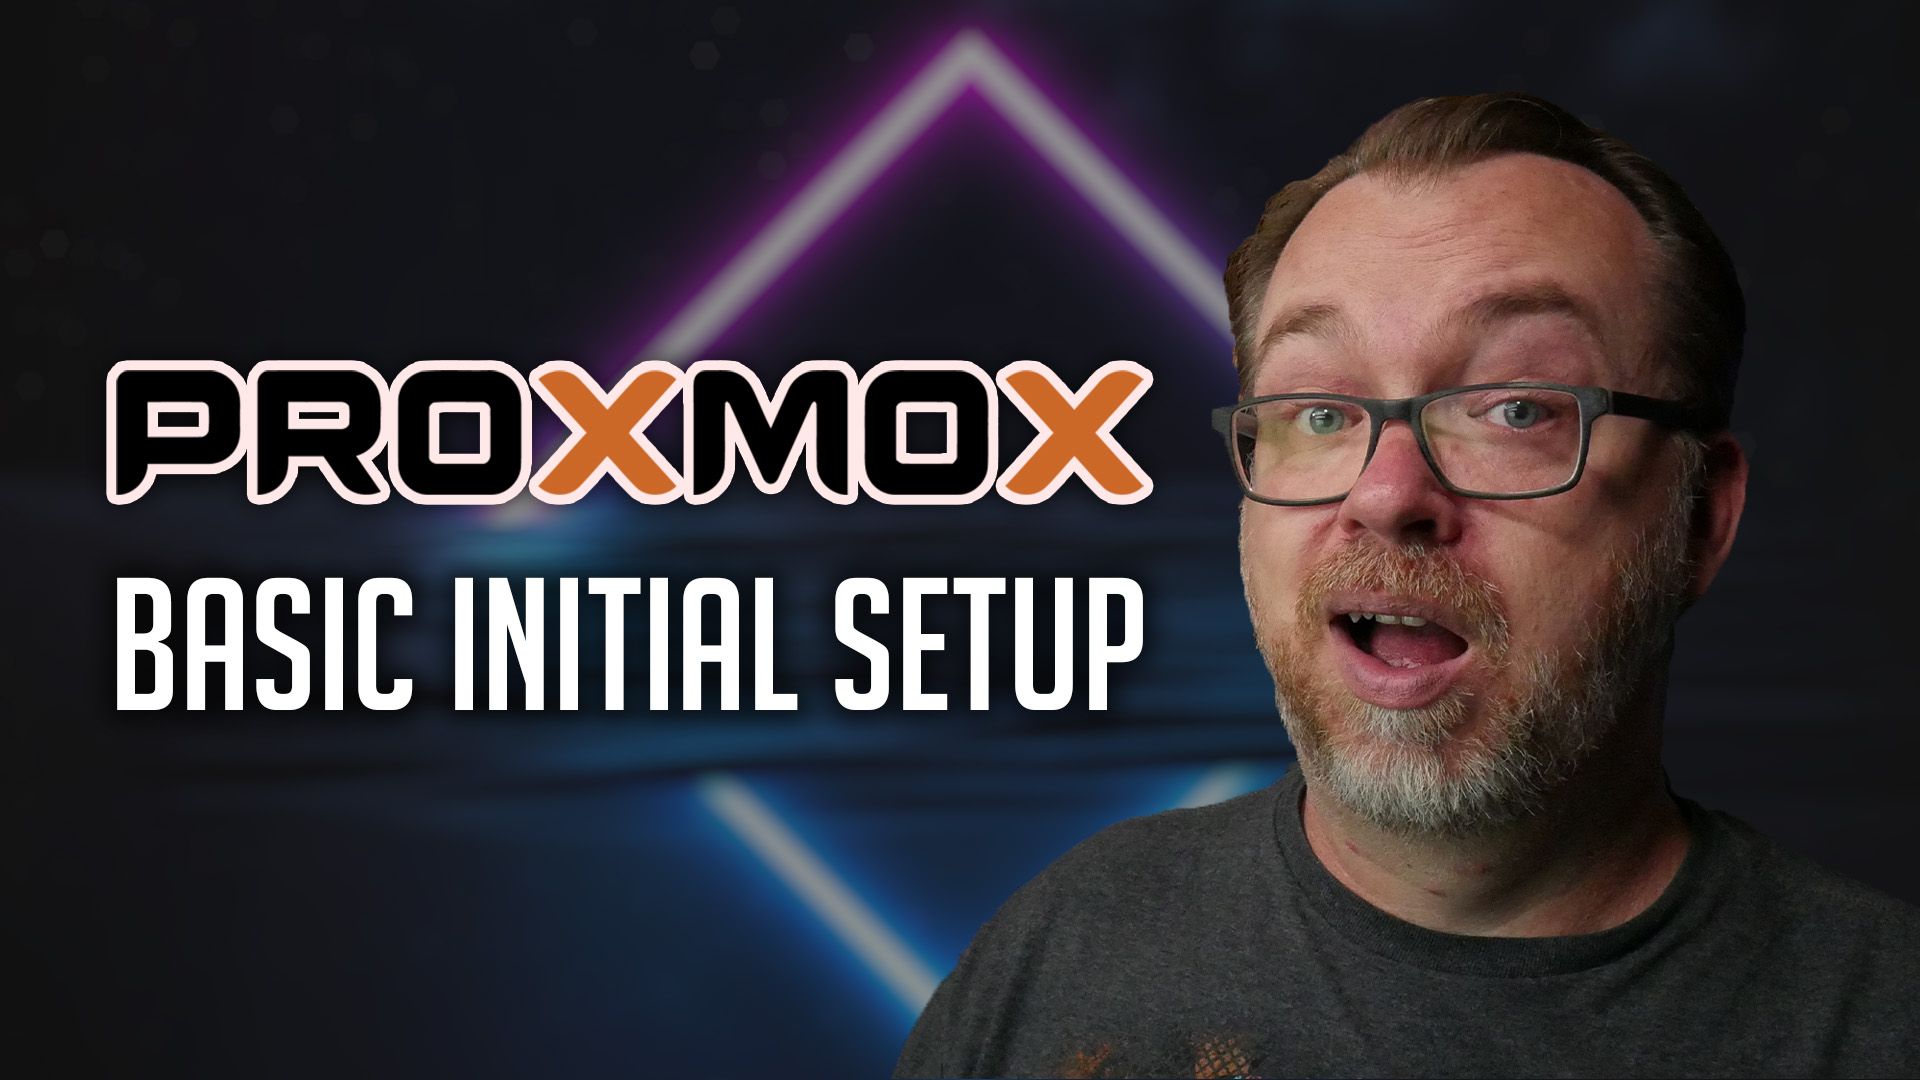 My Proxmox Basic Initial Setup